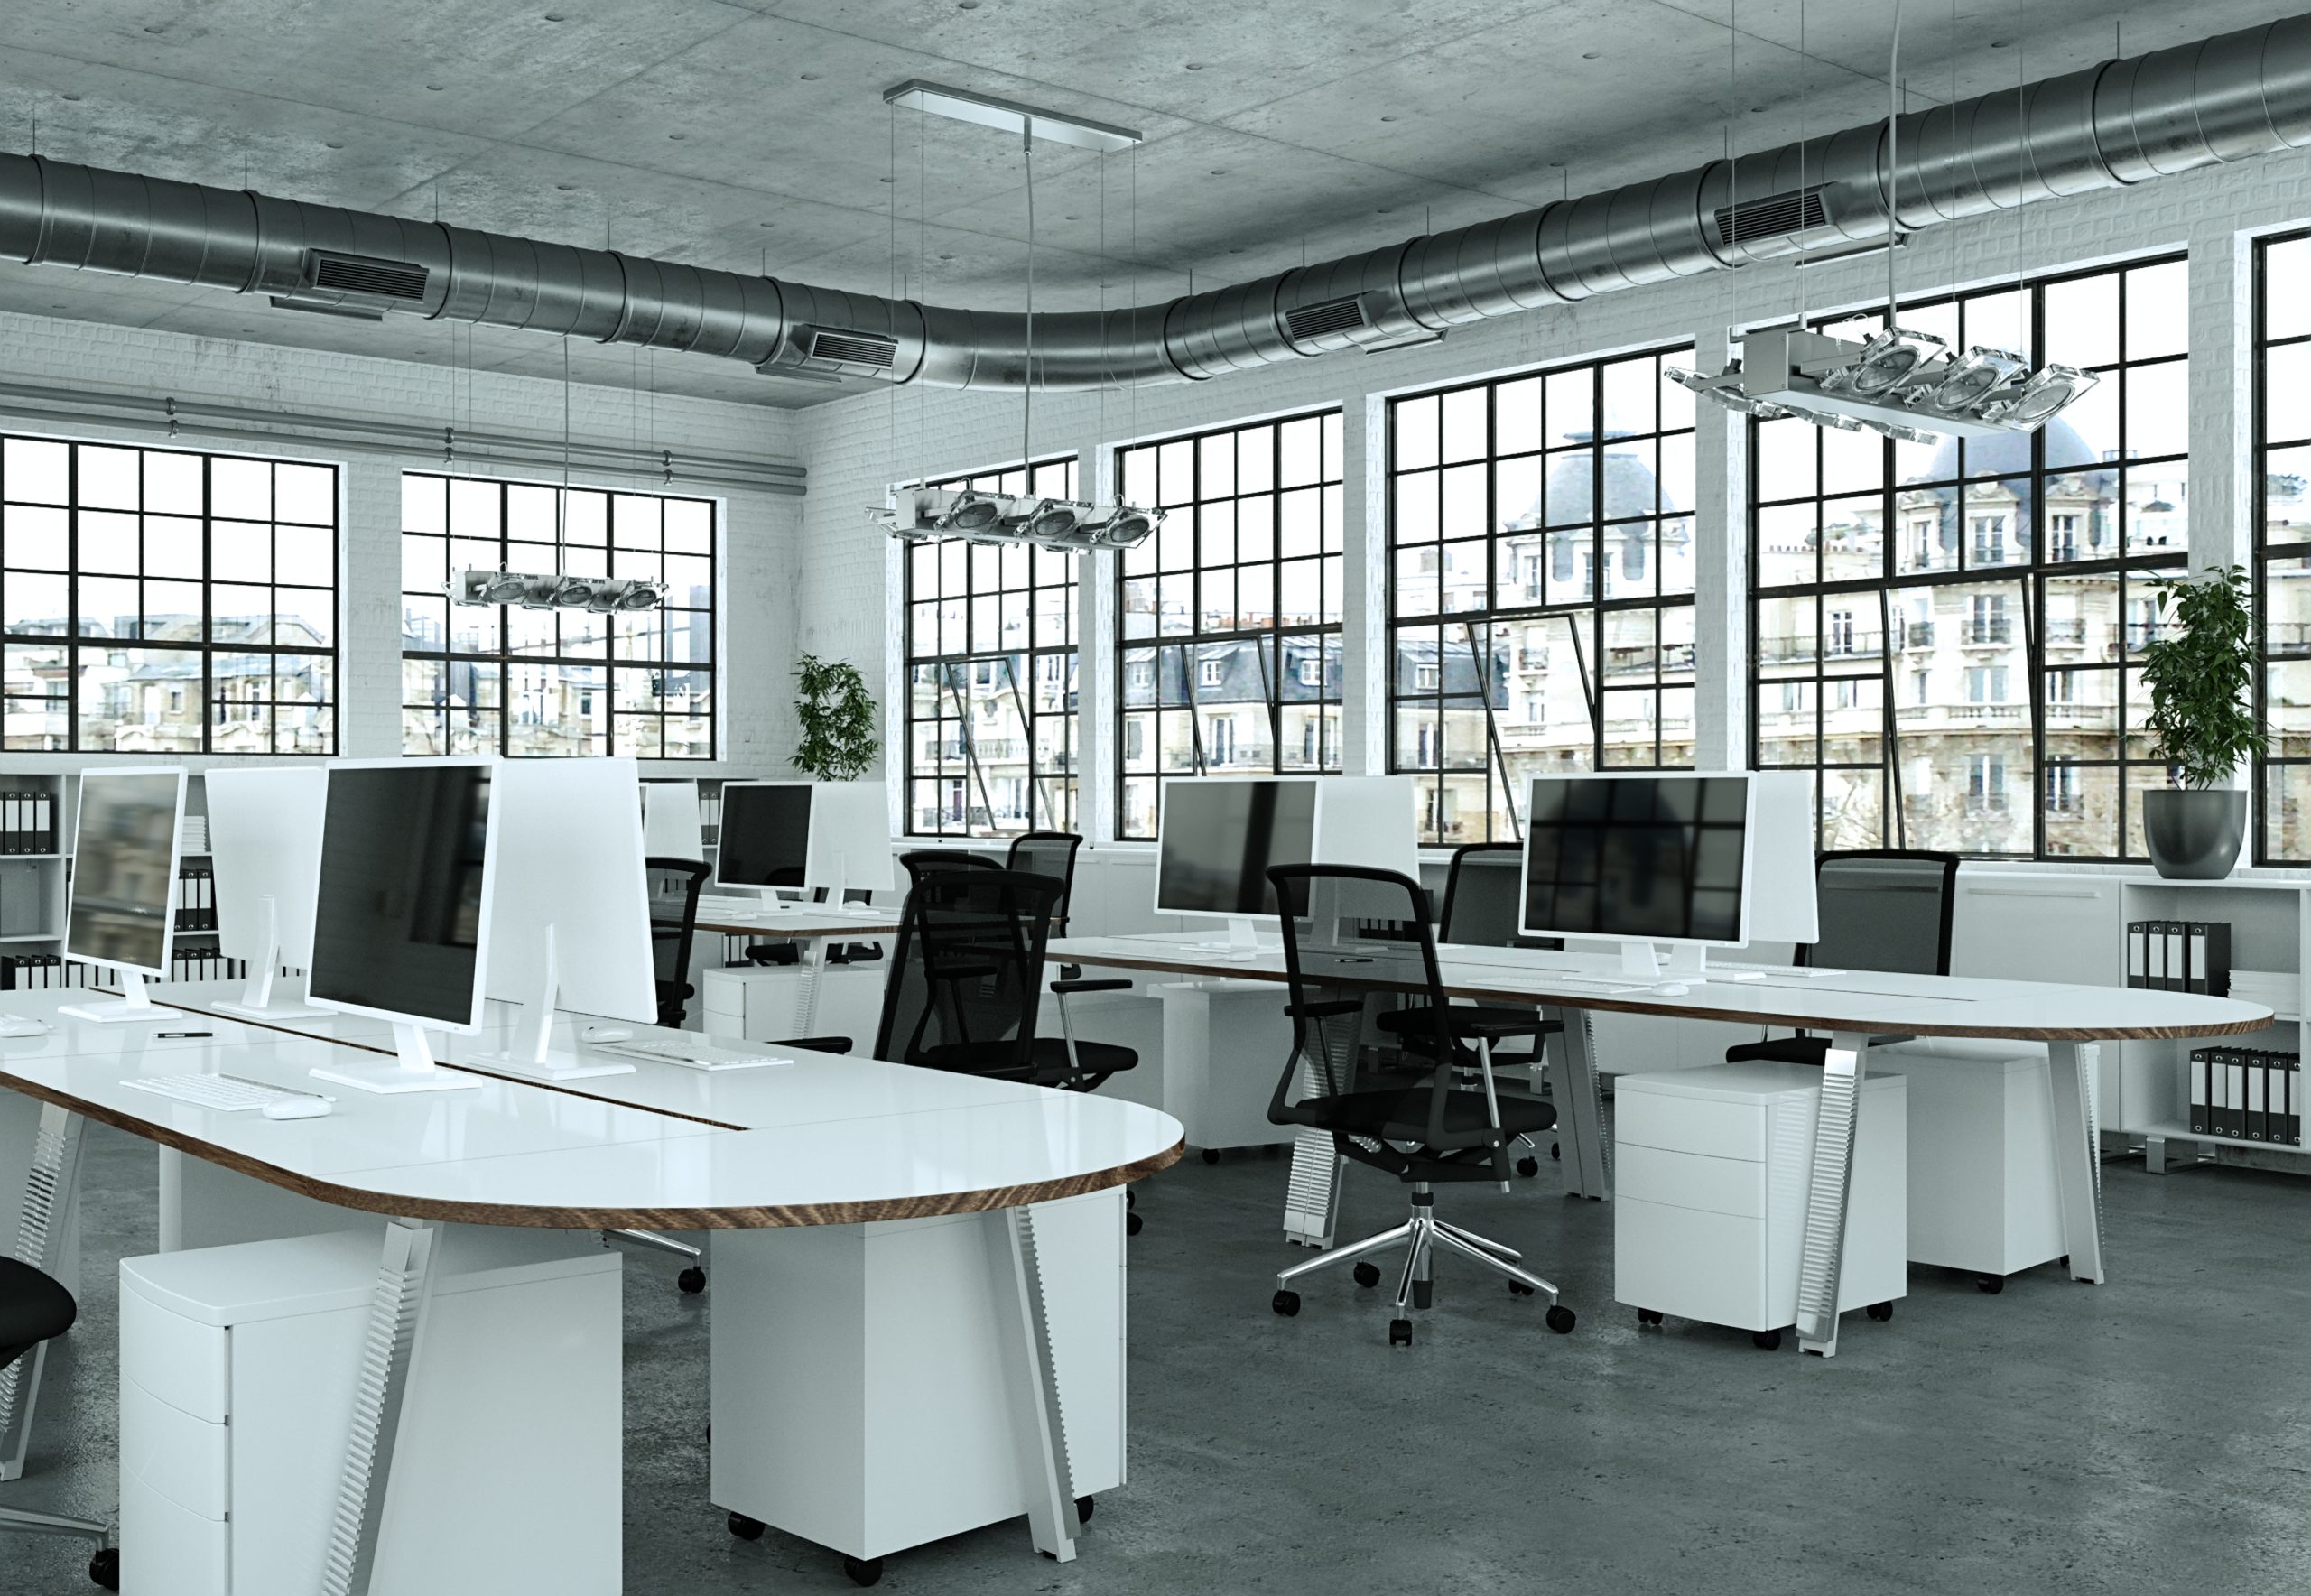 modern large minimalistic office interior Design 3d Rendering mock up